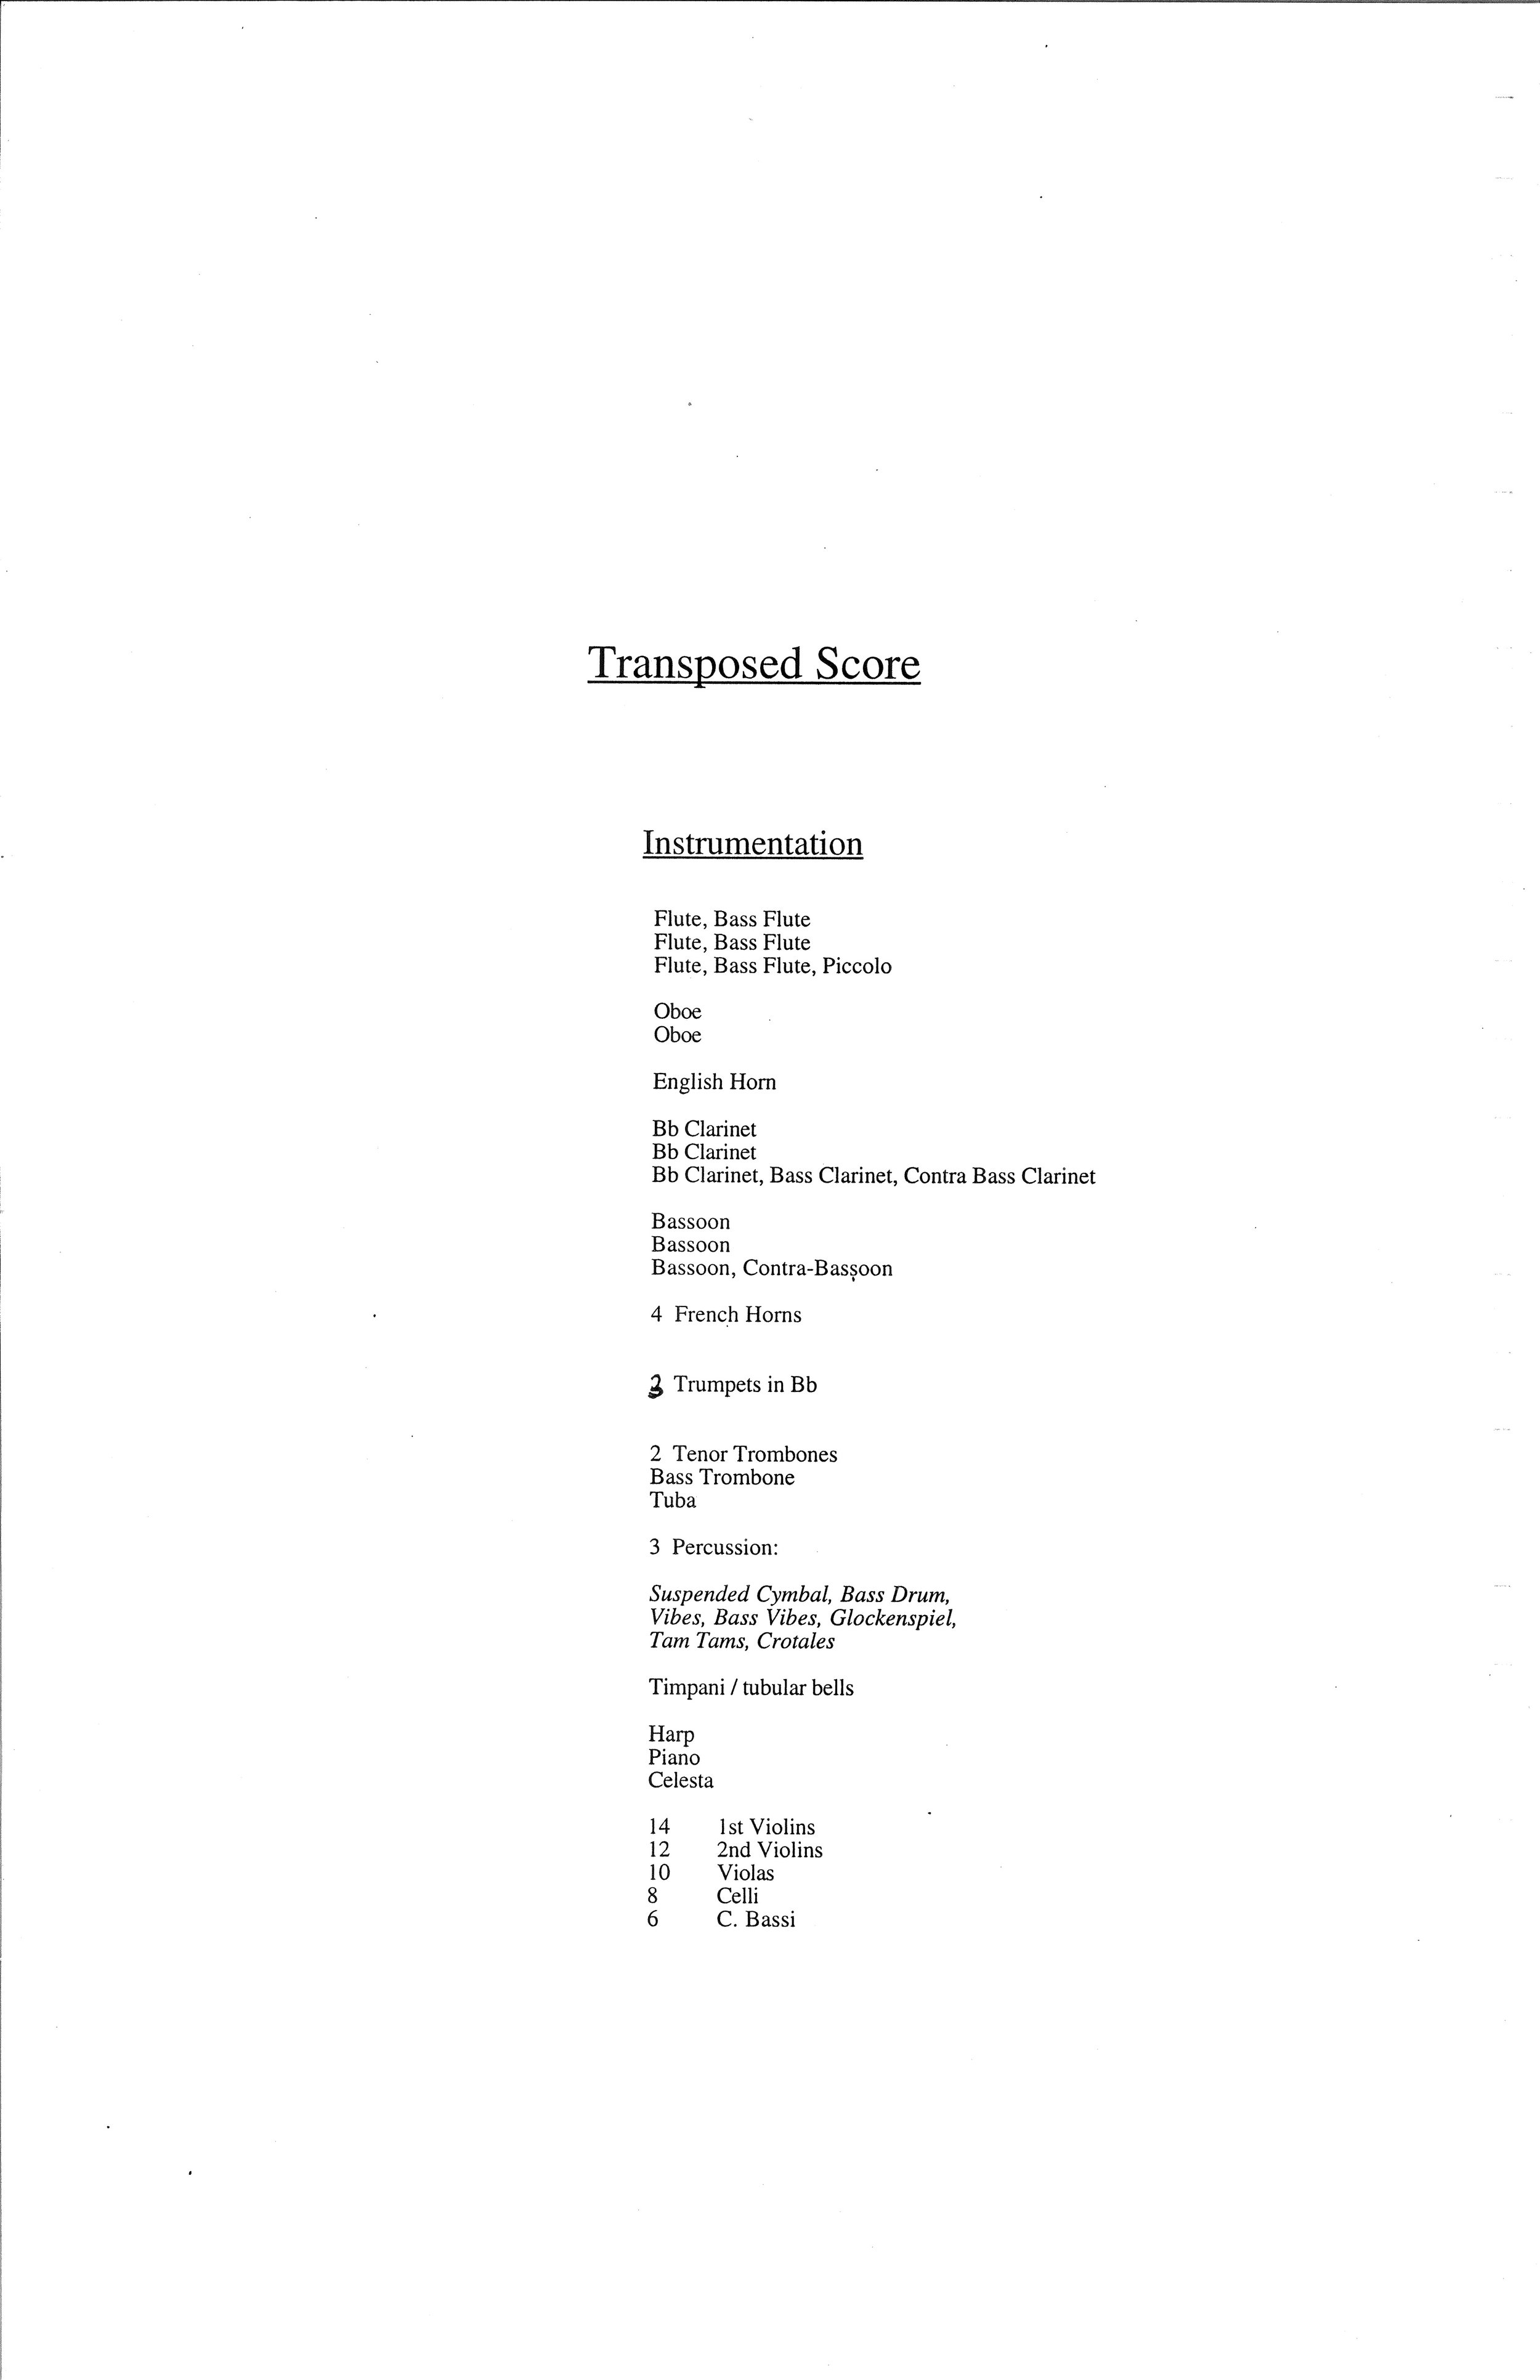 The Tempest Score p3.jpg